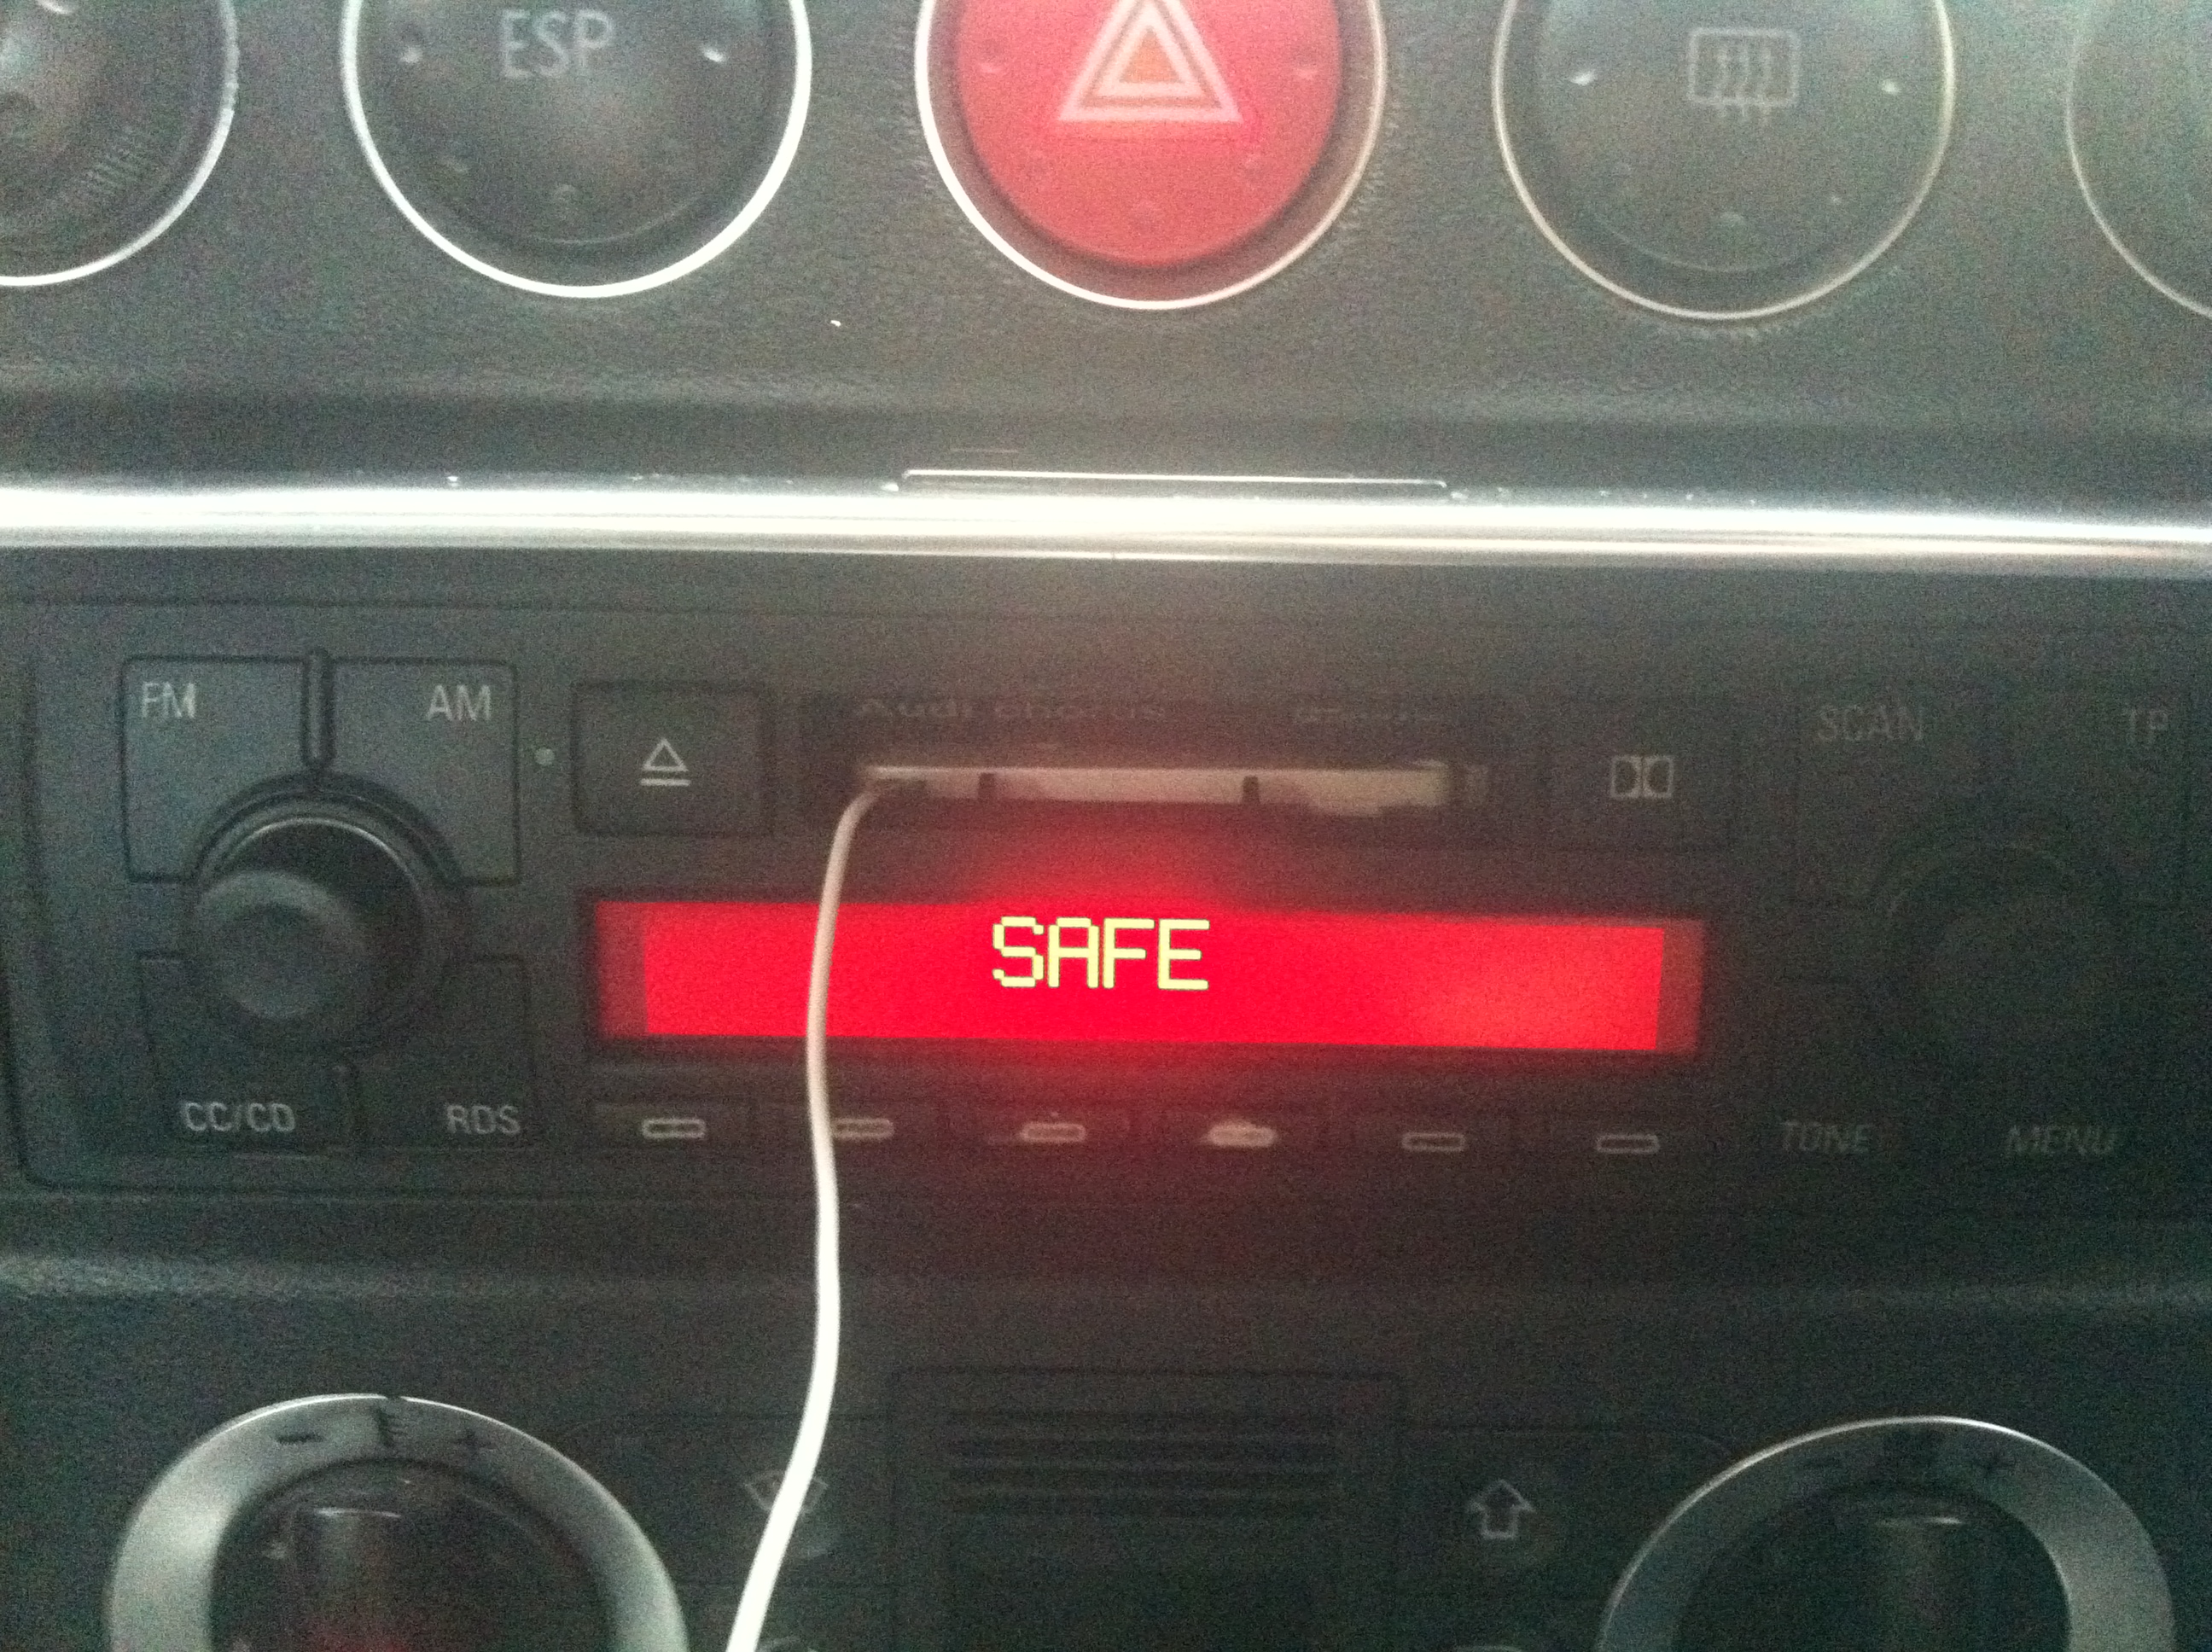 2001 Audi TT Radio saying "SAFE" help please! - Page 1 - Audi, VW, Seat & Skoda - PistonHeads